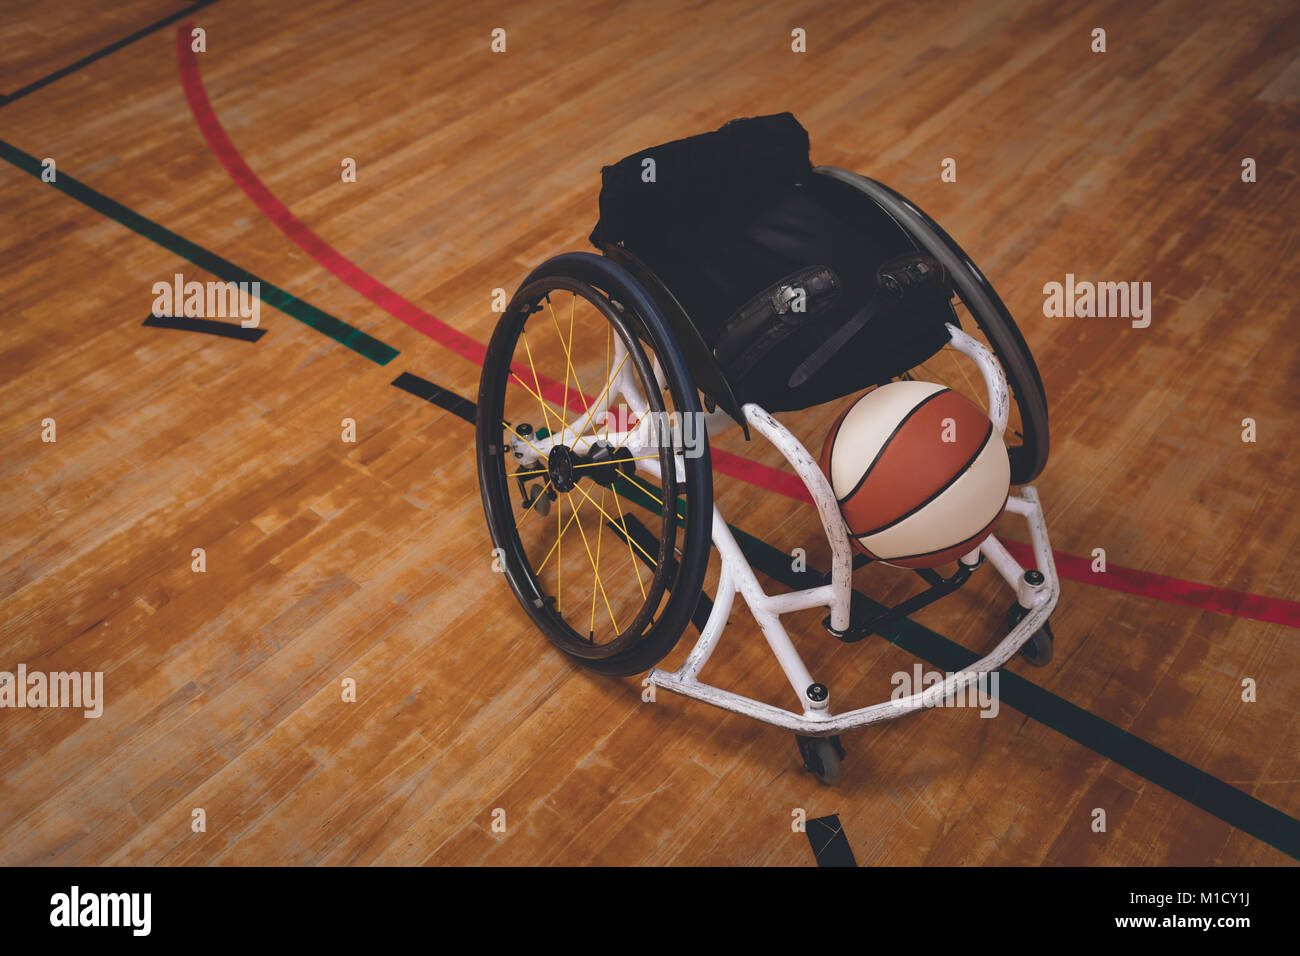 Canasta para silla de ruedas fotografías e imágenes de alta resolución -  Alamy